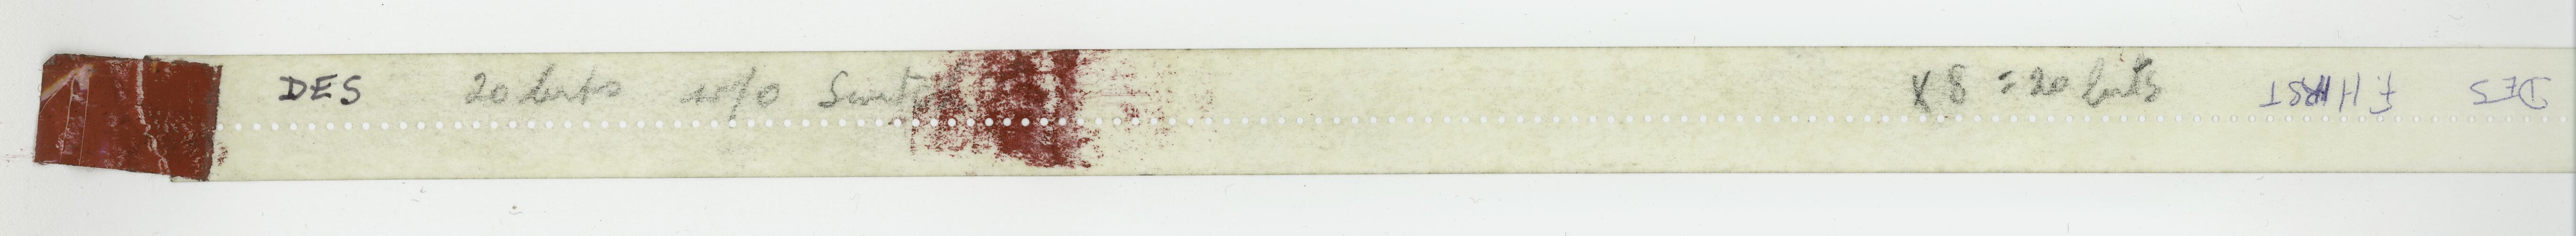 Paper Tape - 5 Hole, CSIRAC Computer, 'DES 20 lr/s w/o Switch', 1959-1964